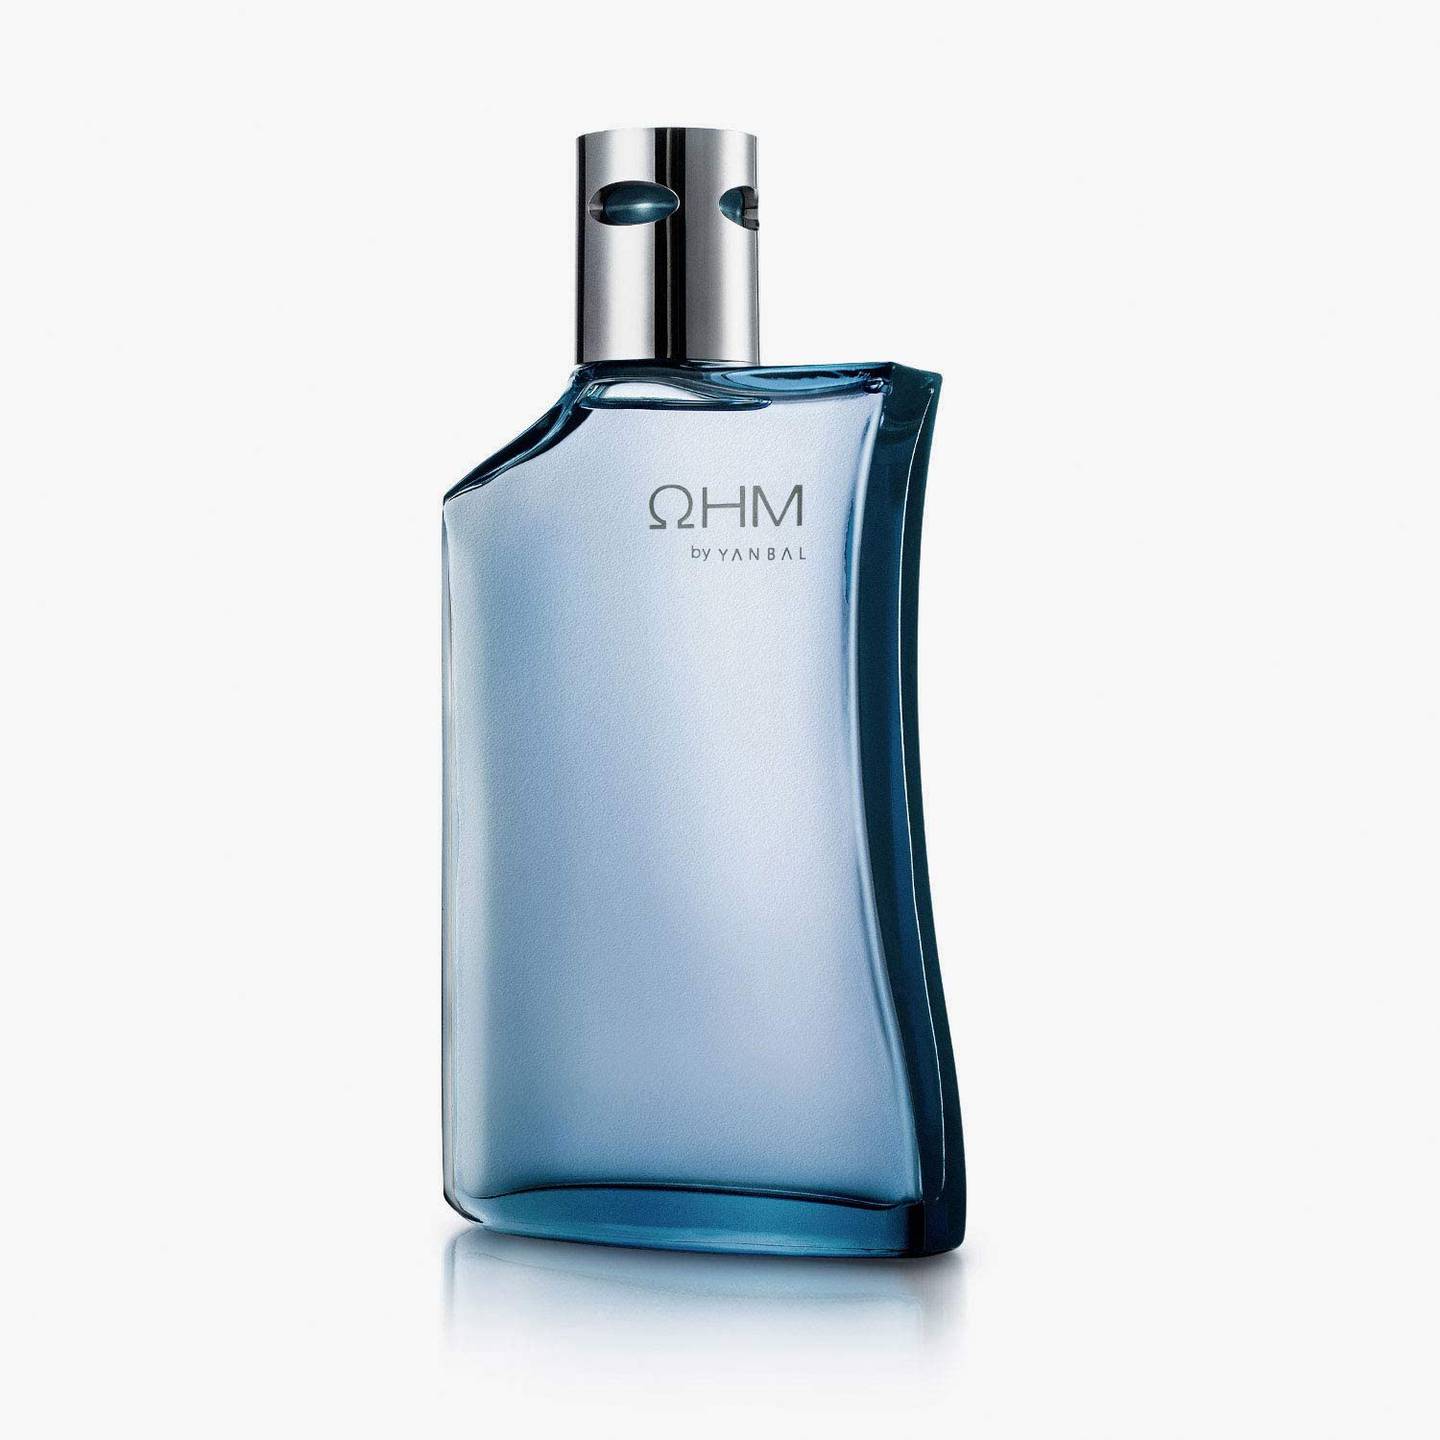 Perfume para hombres QHM de Yanbal